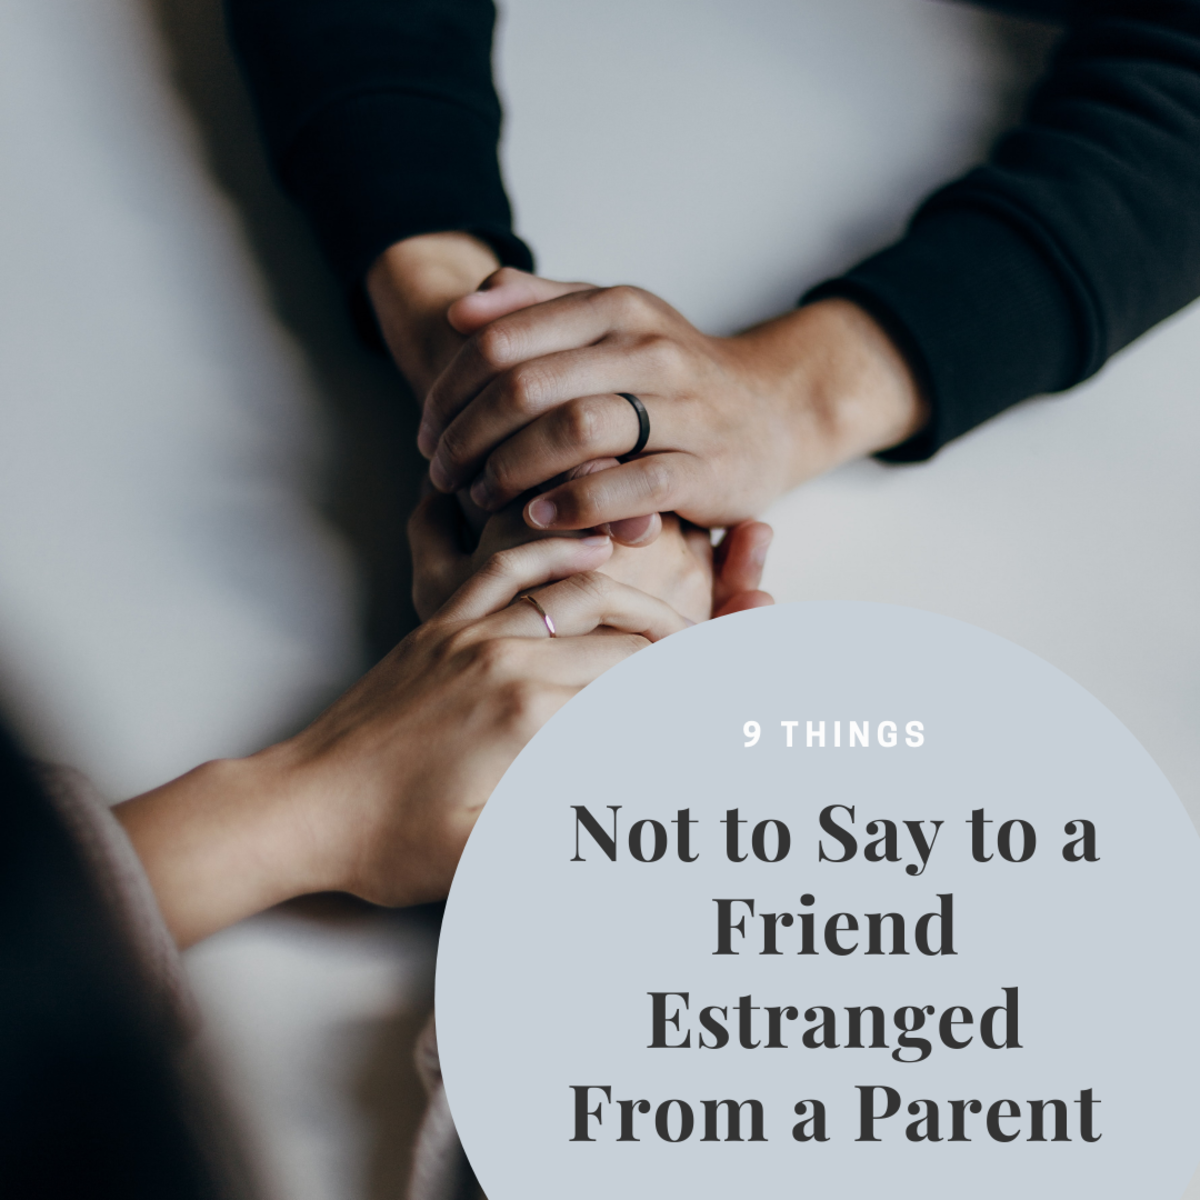 How to support a friend going through parental estrangement.